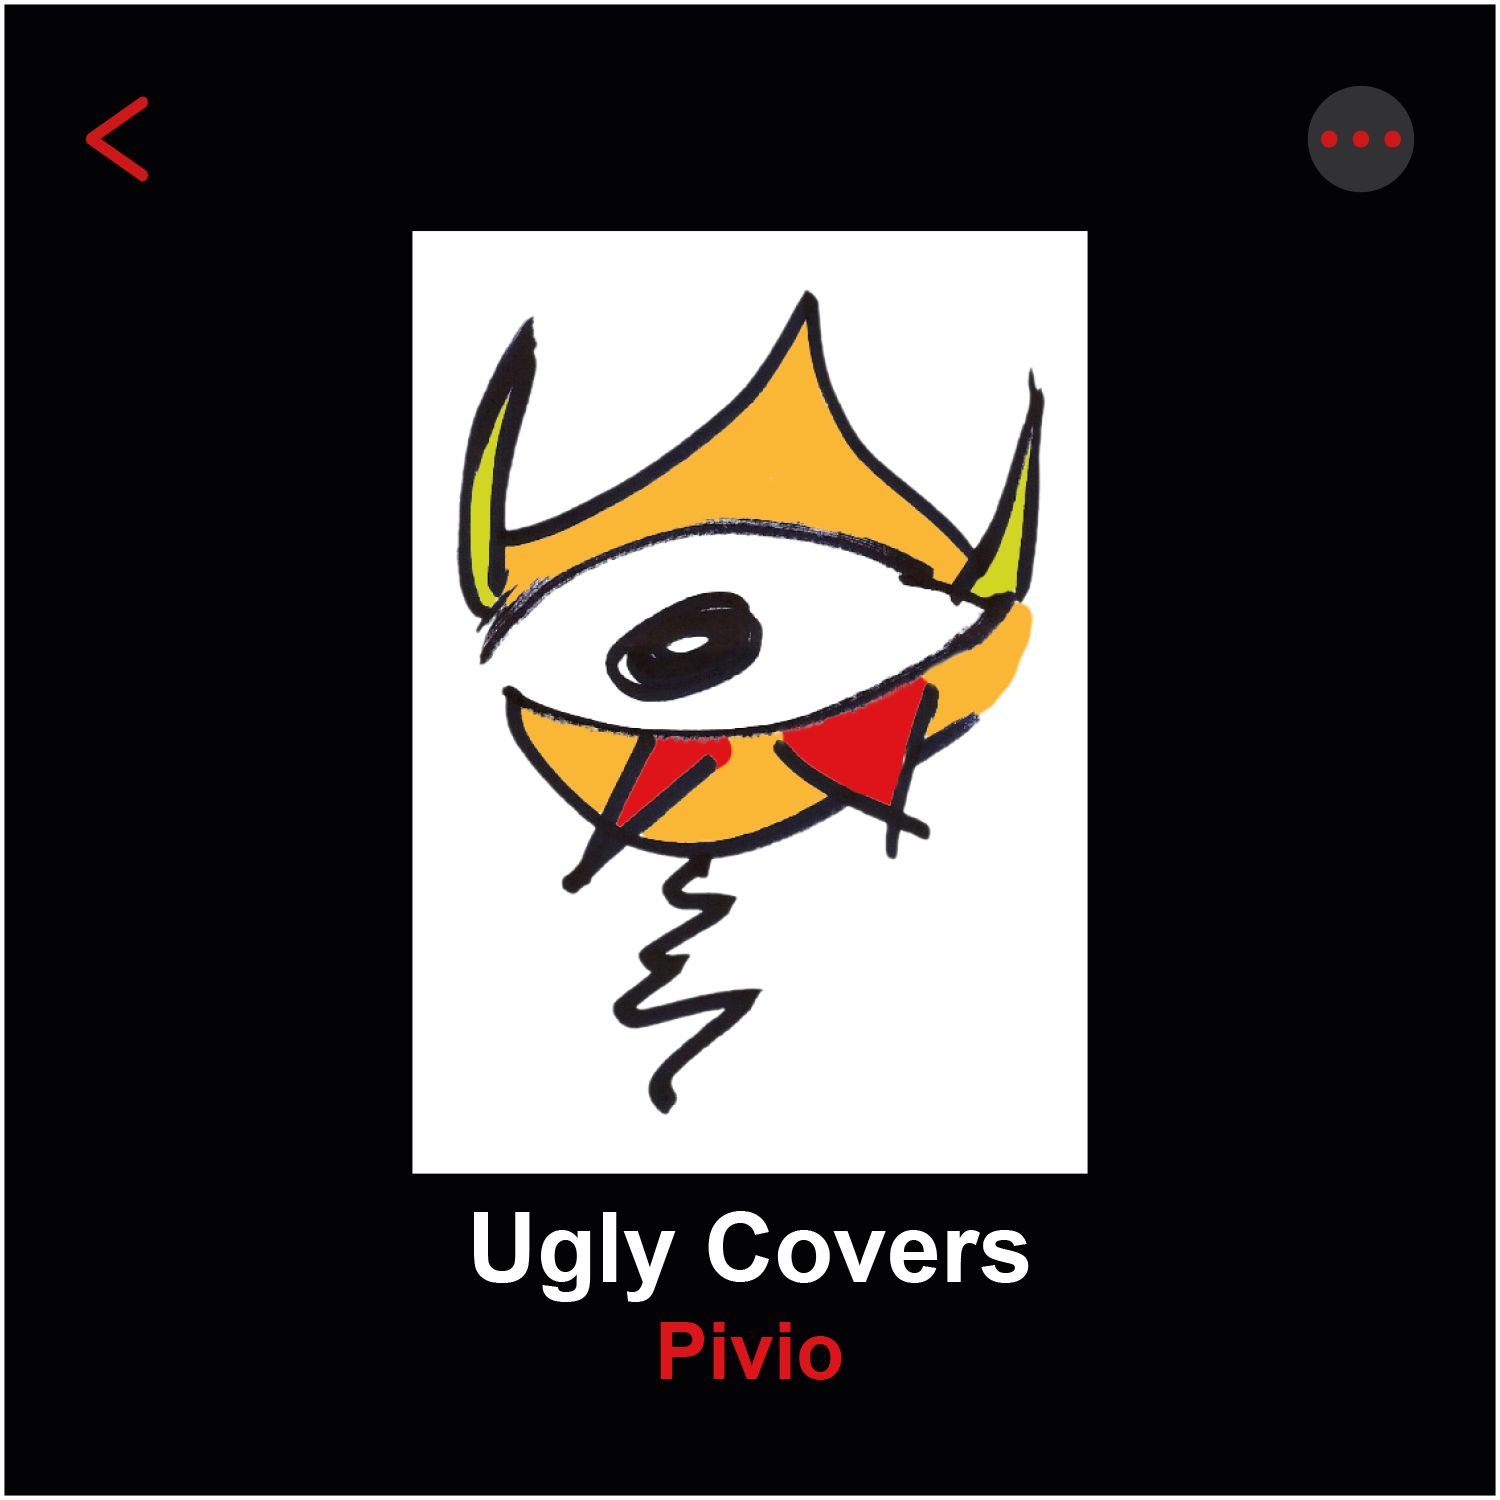 Ugly covers, Pivio’s new album